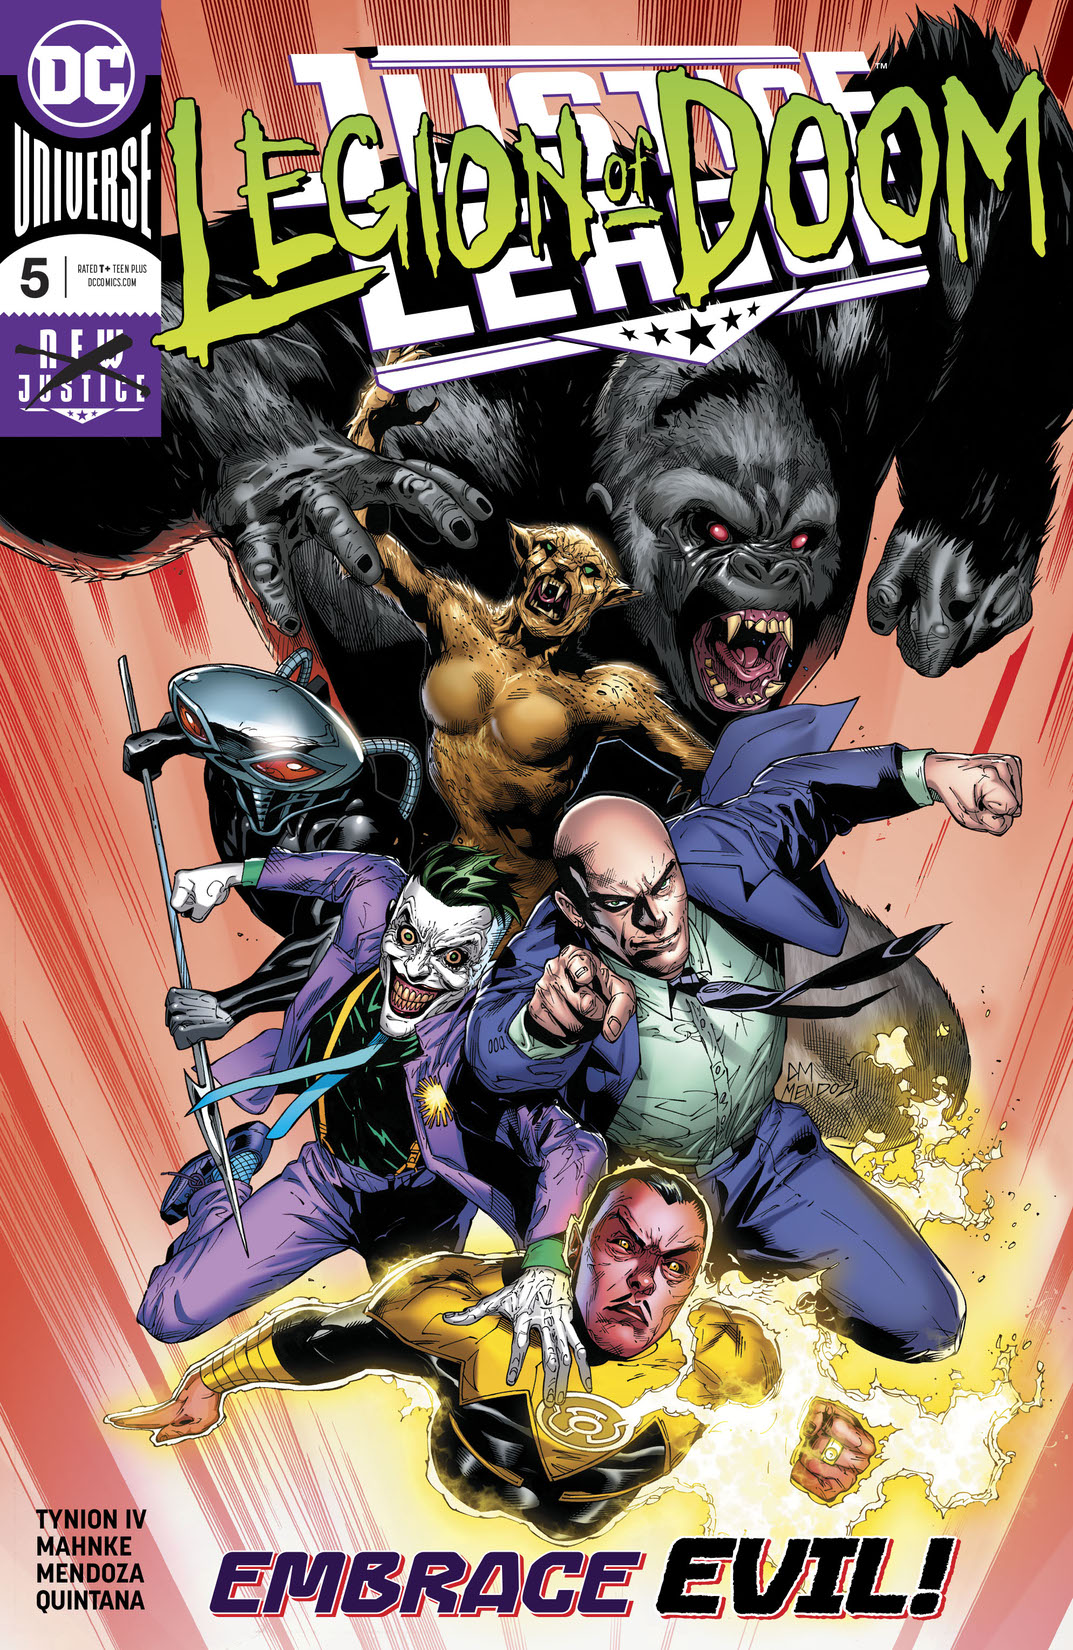 Justice League (2018-) #5 preview images